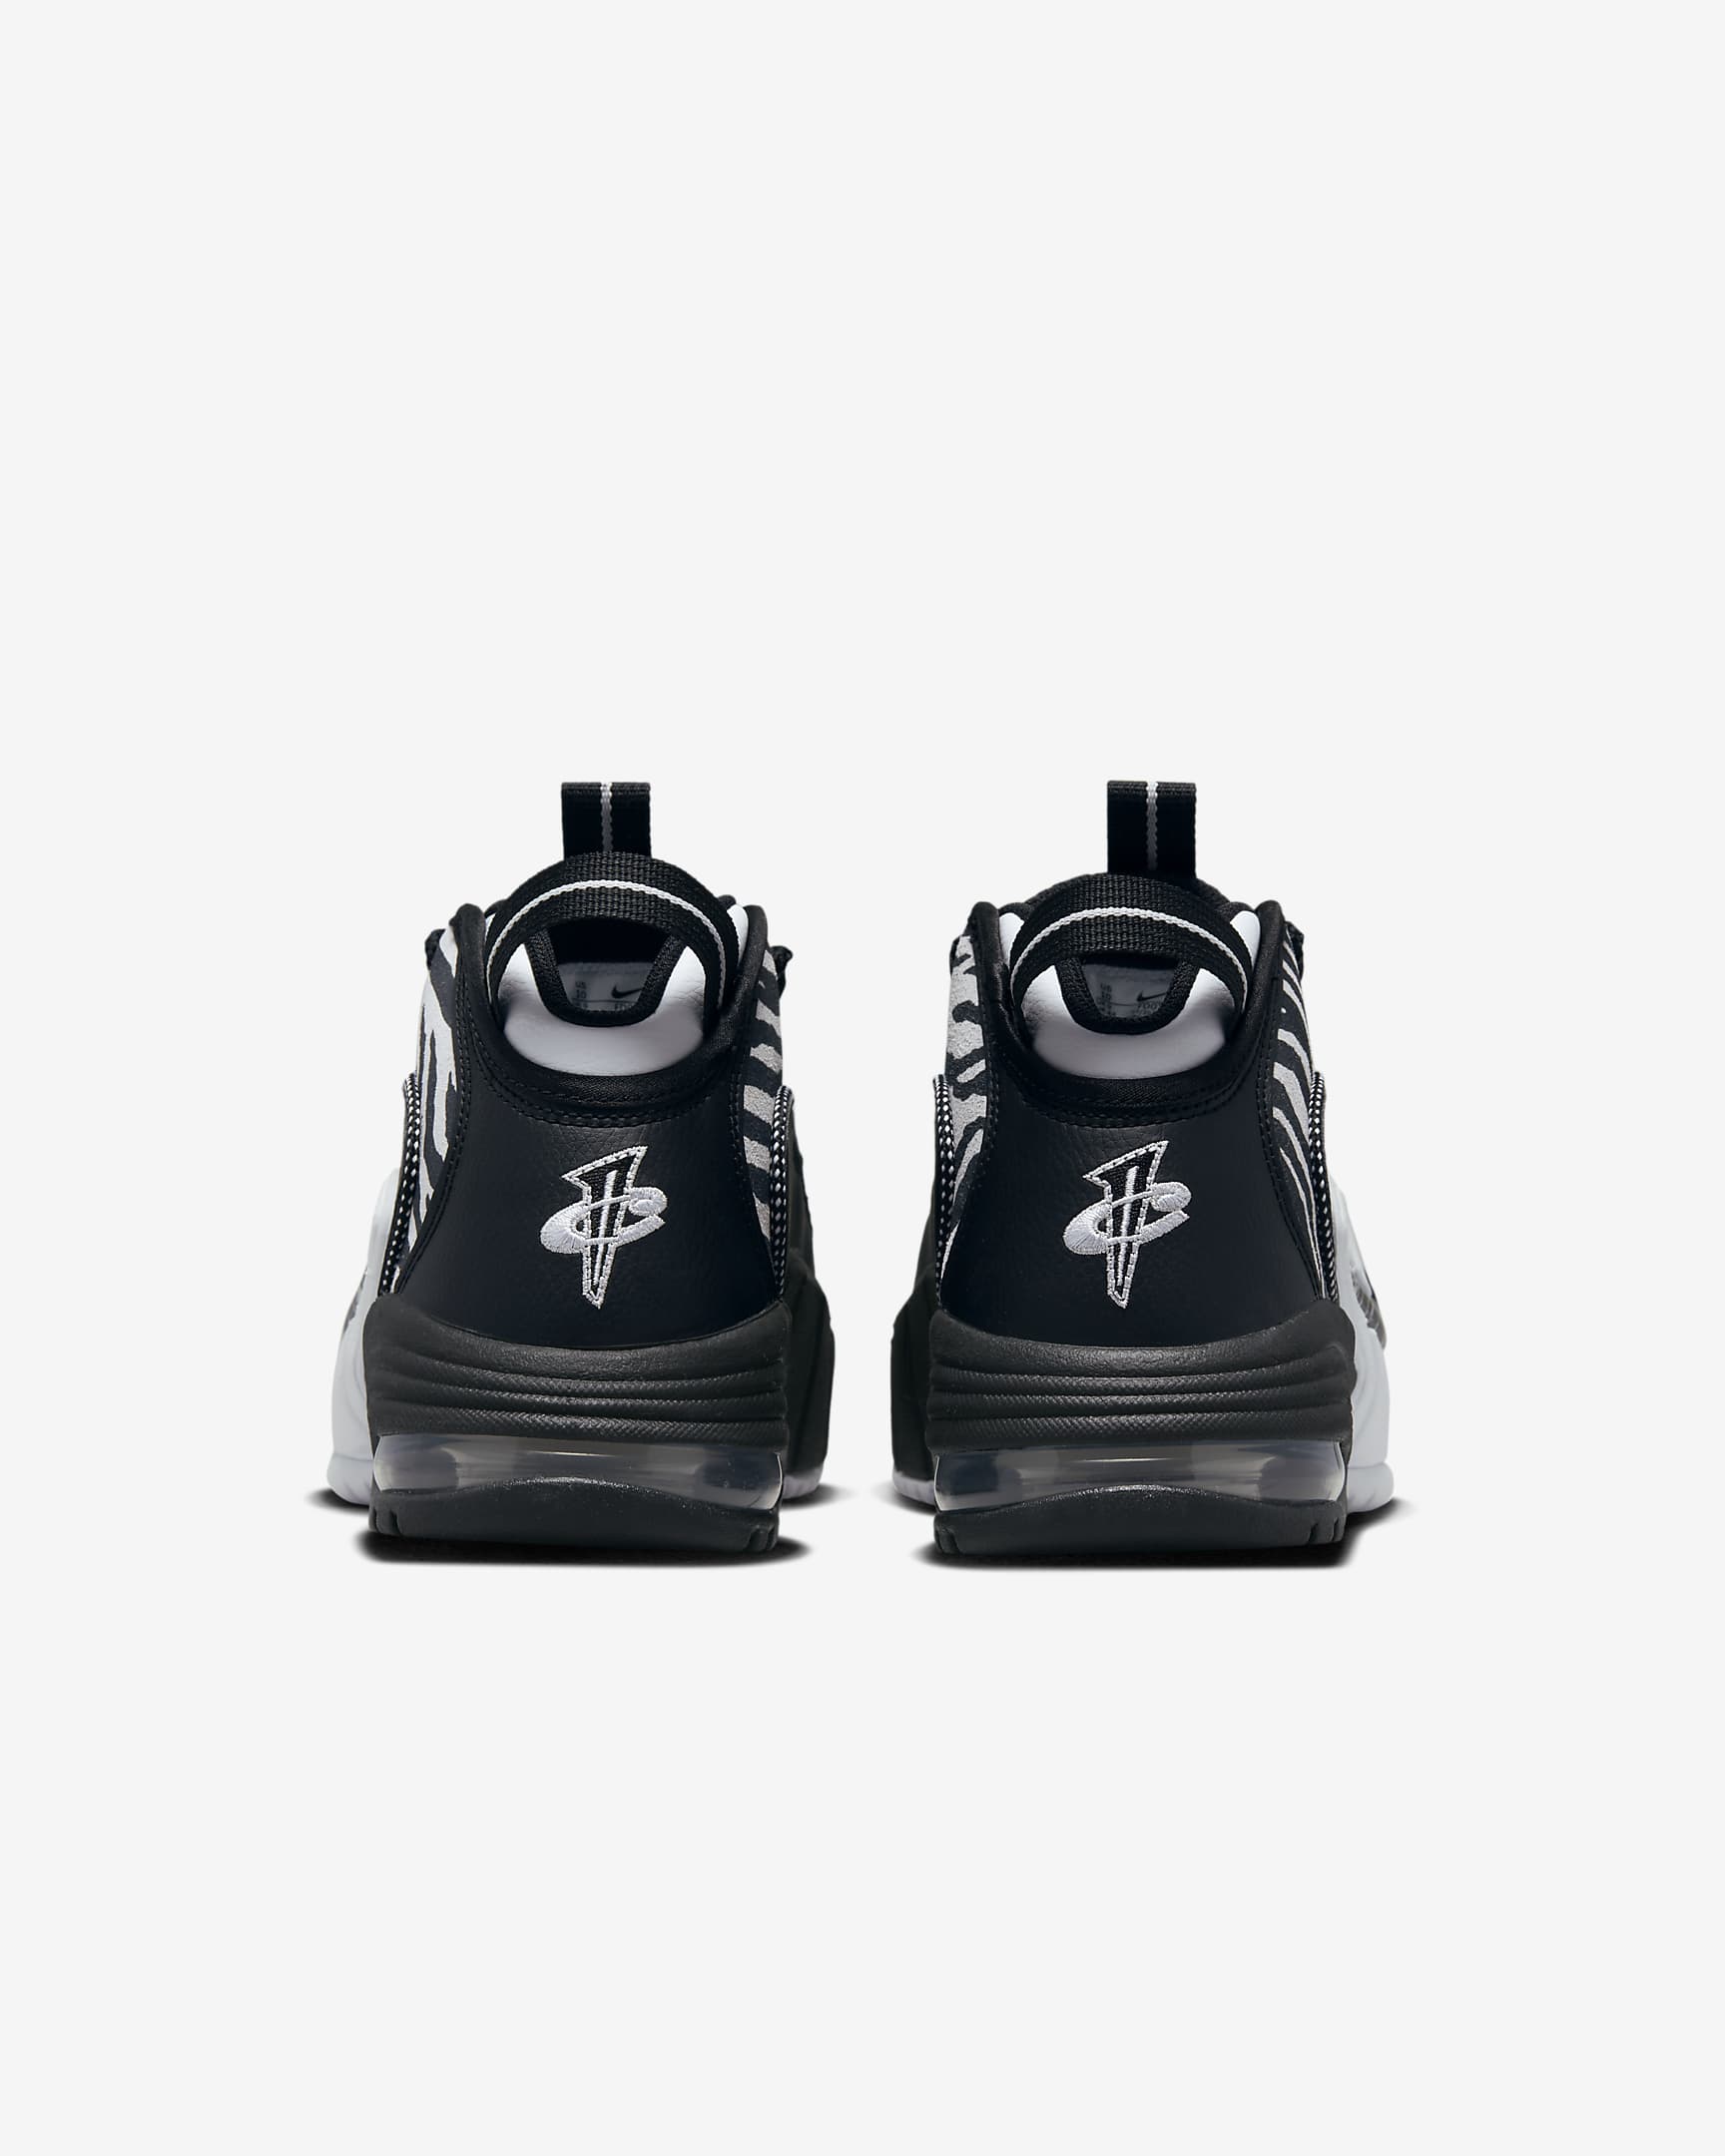 Nike Air Max Penny Men's Shoes - Black/Vast Grey/White/Black